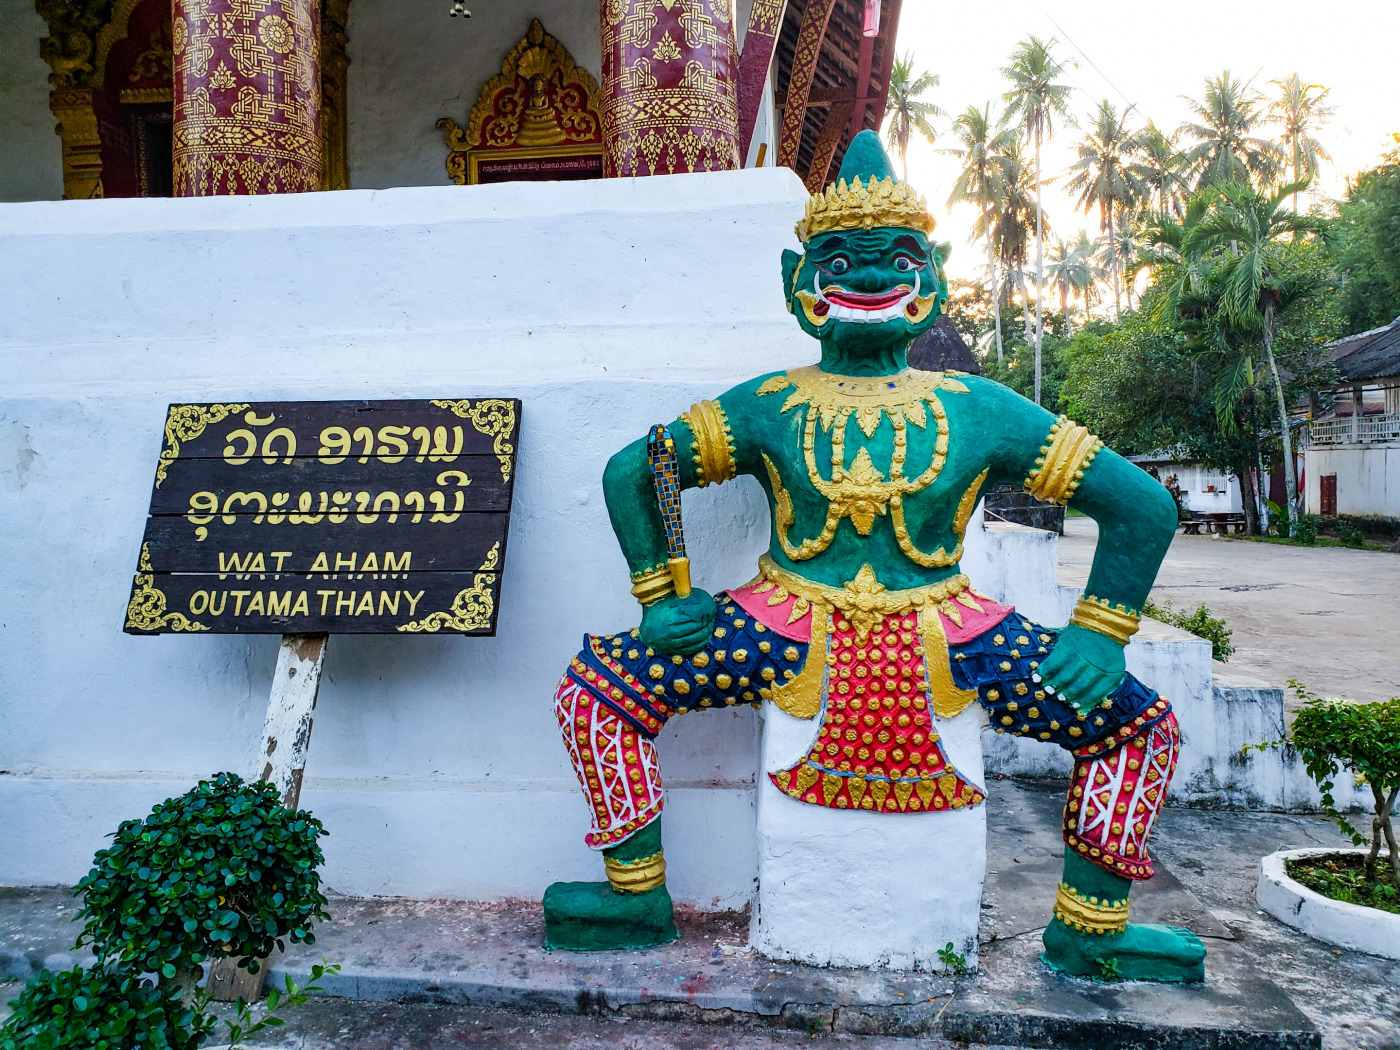 Laos Luang Prabang Wat Aham Outamathany Demon